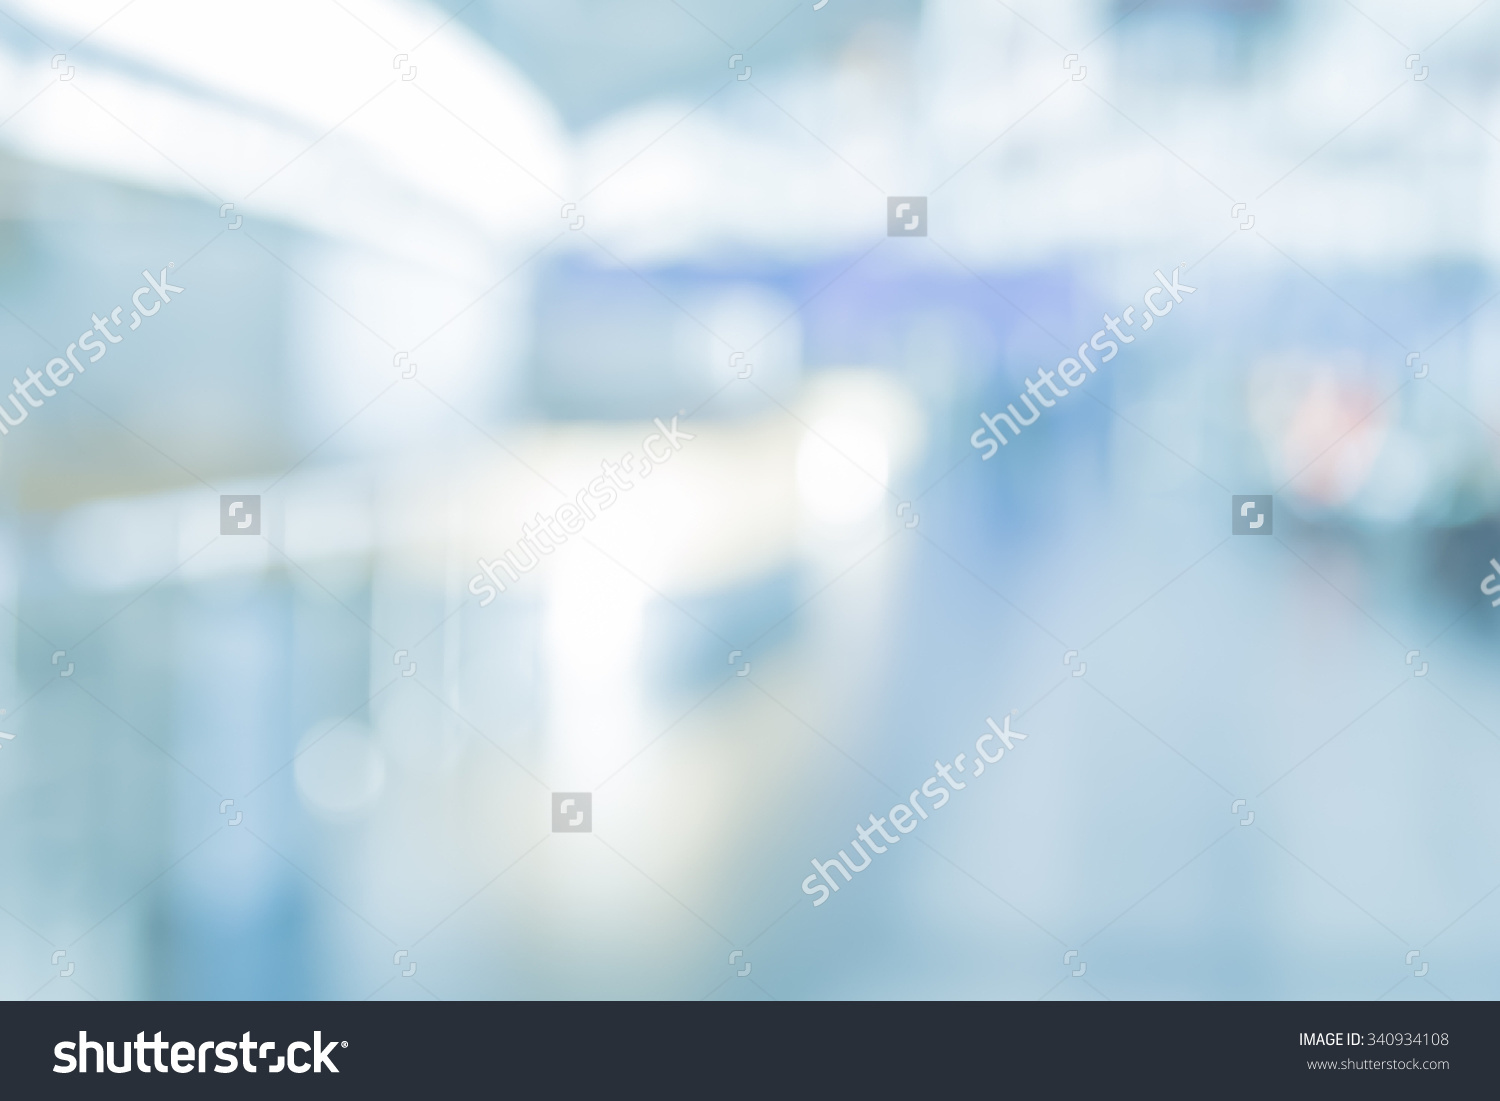 stock-photo-blurred-medical-background-340934108